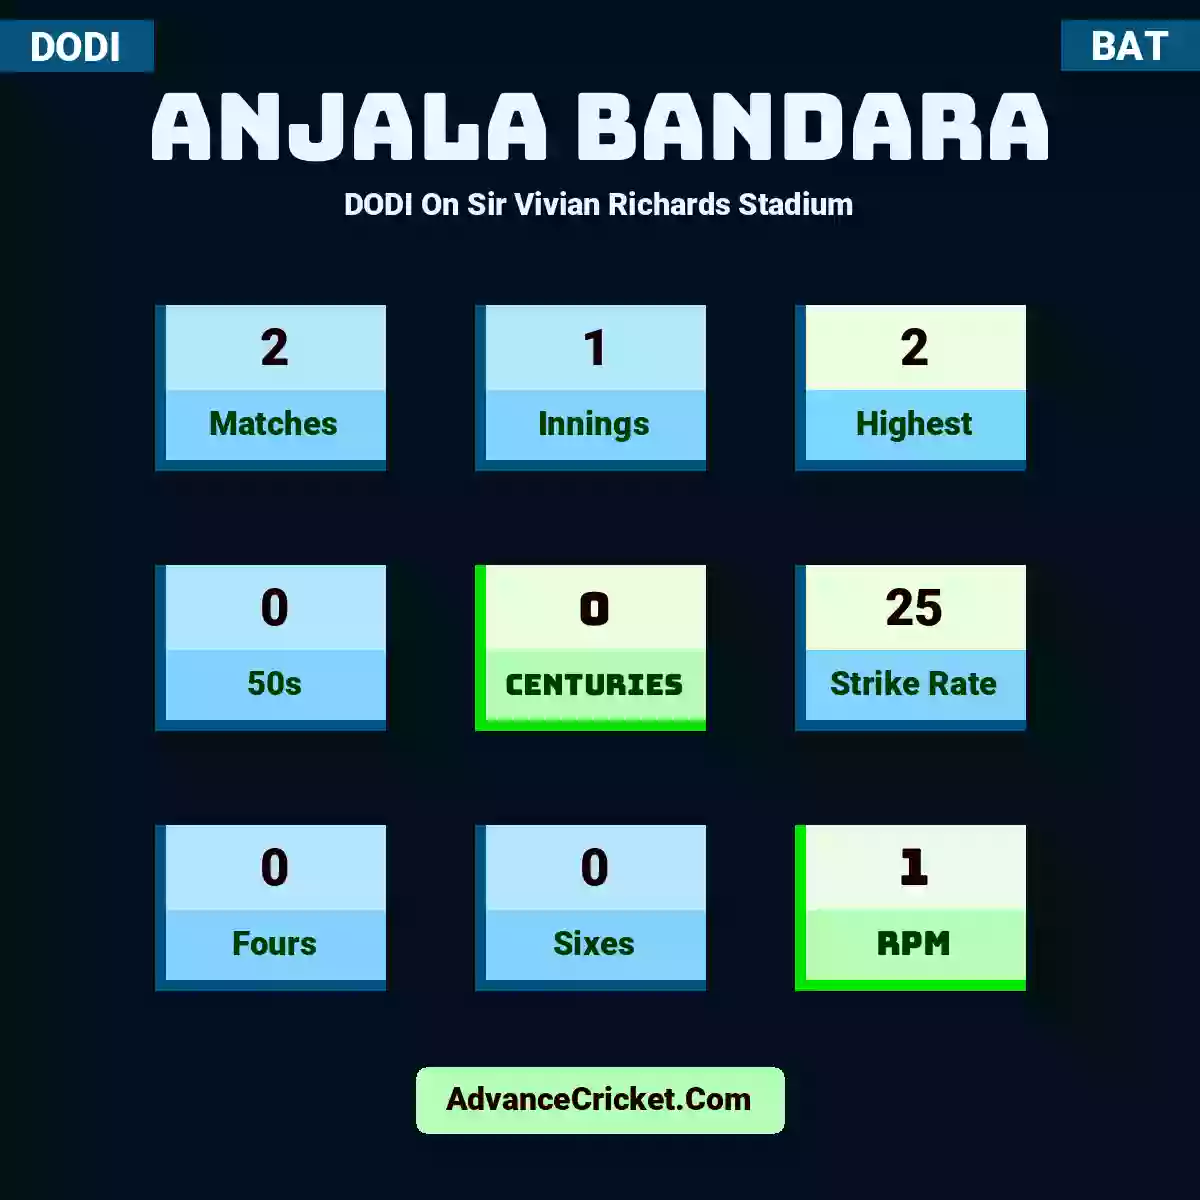 Anjala Bandara DODI  On Sir Vivian Richards Stadium, Anjala Bandara played 2 matches, scored 2 runs as highest, 0 half-centuries, and 0 centuries, with a strike rate of 25. A.Bandara hit 0 fours and 0 sixes, with an RPM of 1.